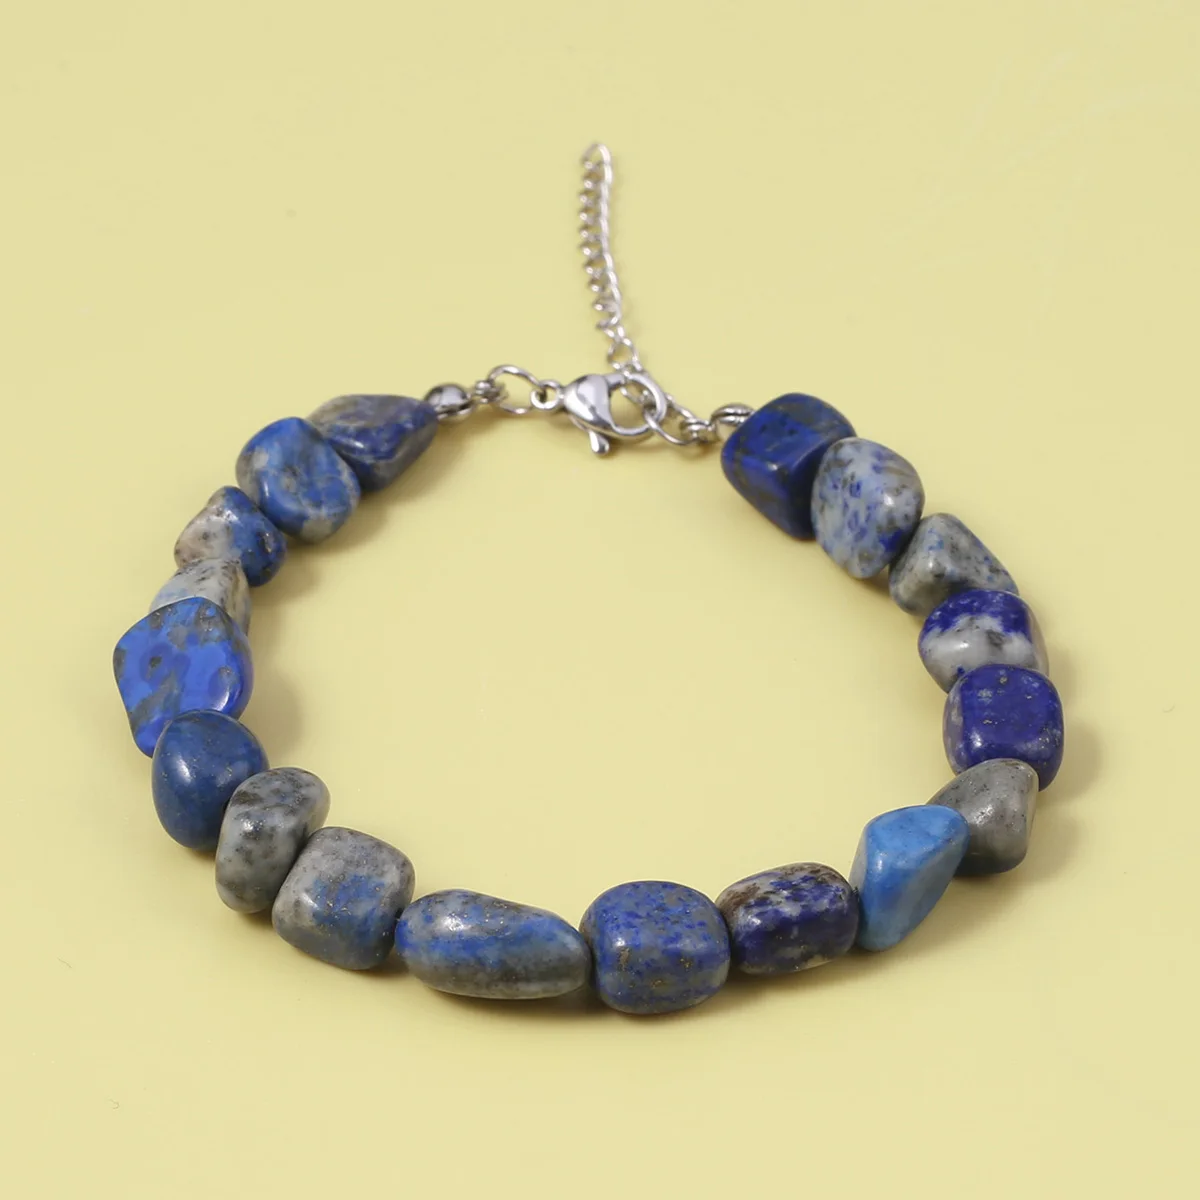 

Natural Stone Lapis Lazuli Beads Bracelet Cube Polished Amazonite for Women Man Charm Reiki Healing Bracelet Jewelry Gifts